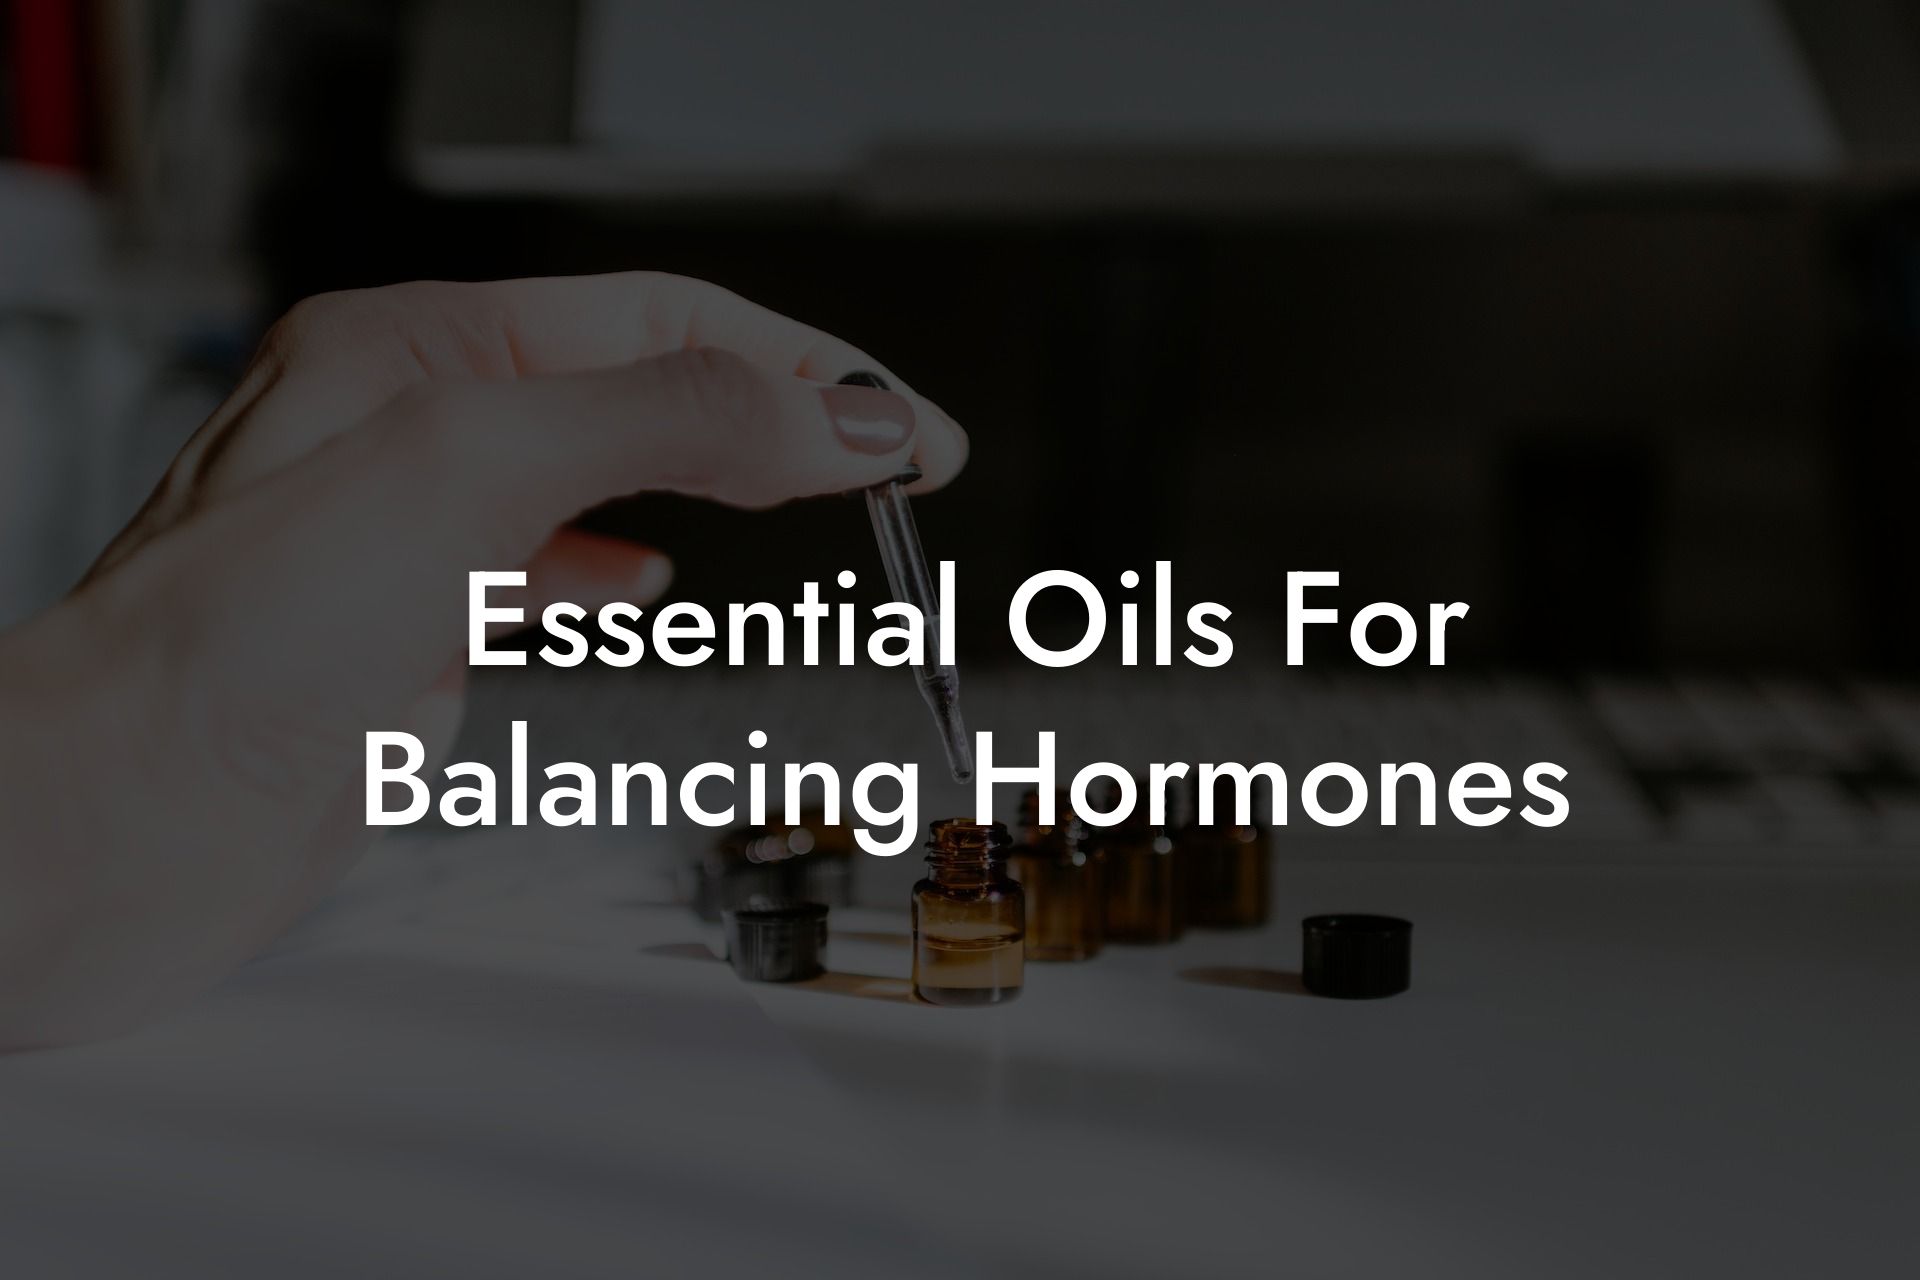 Essential Oils For Balancing Hormones